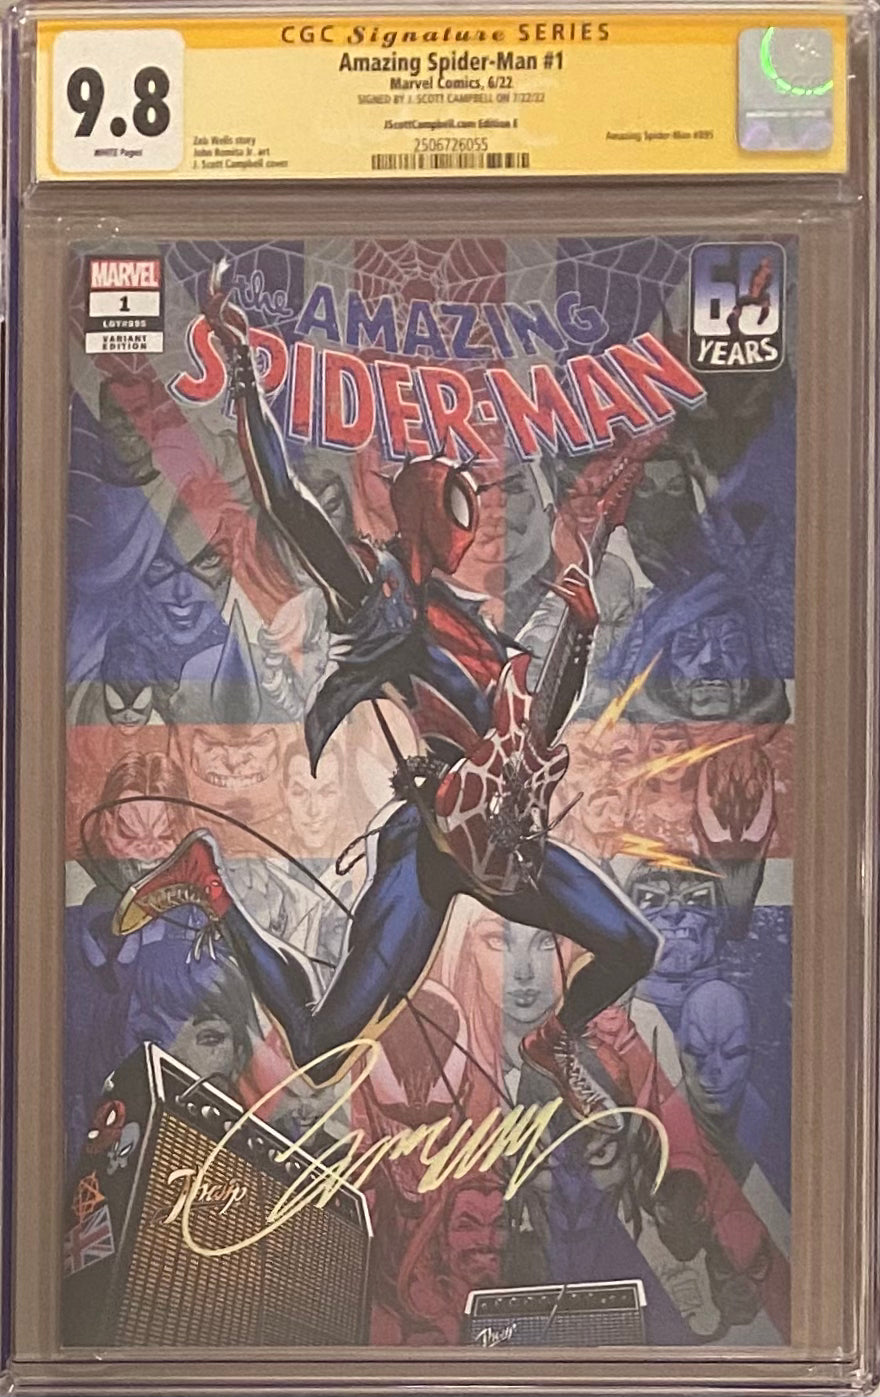 Amazing Spider-Man #1 J. Scott Campbell Edition E "Spider-Punk" CGC 9.8 SS